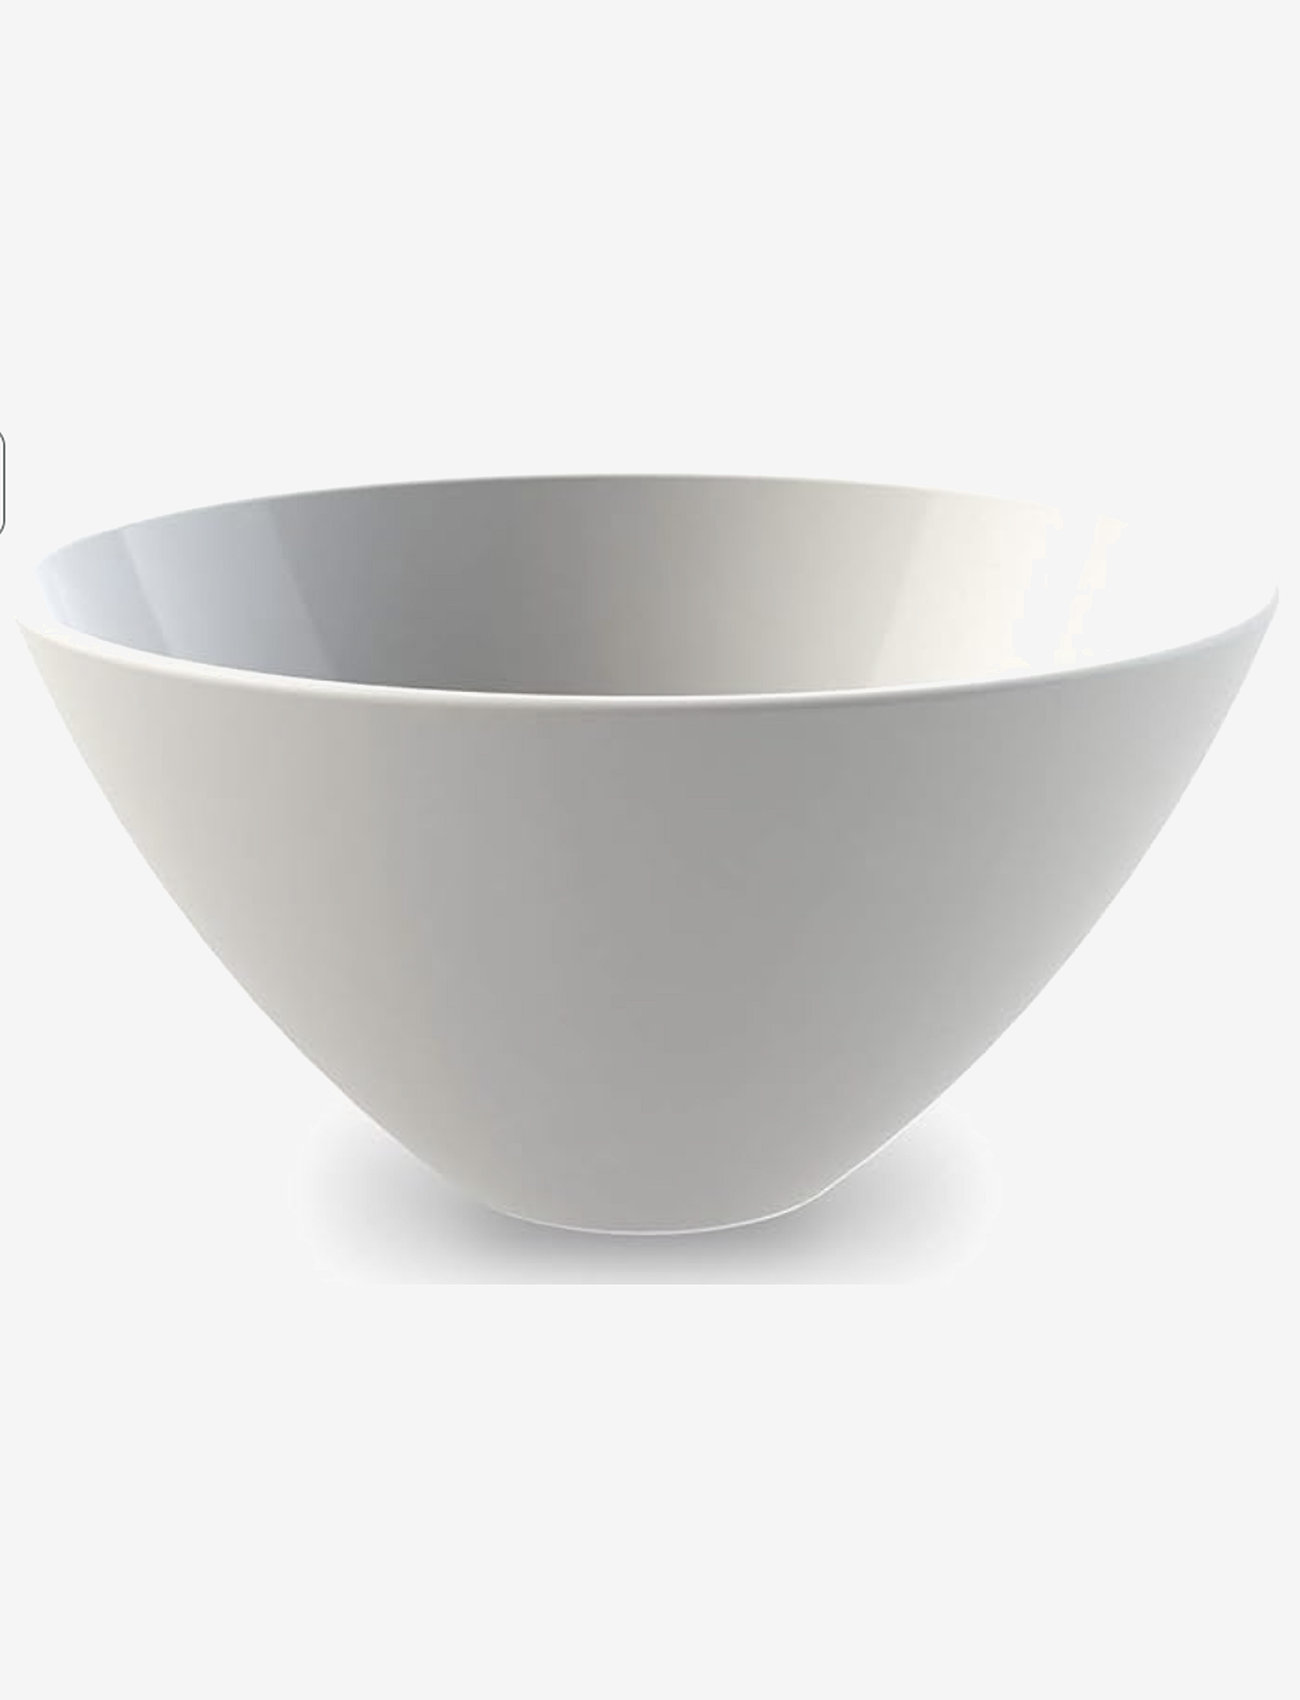 Cooee Design - Bowl 12cm - white - 0